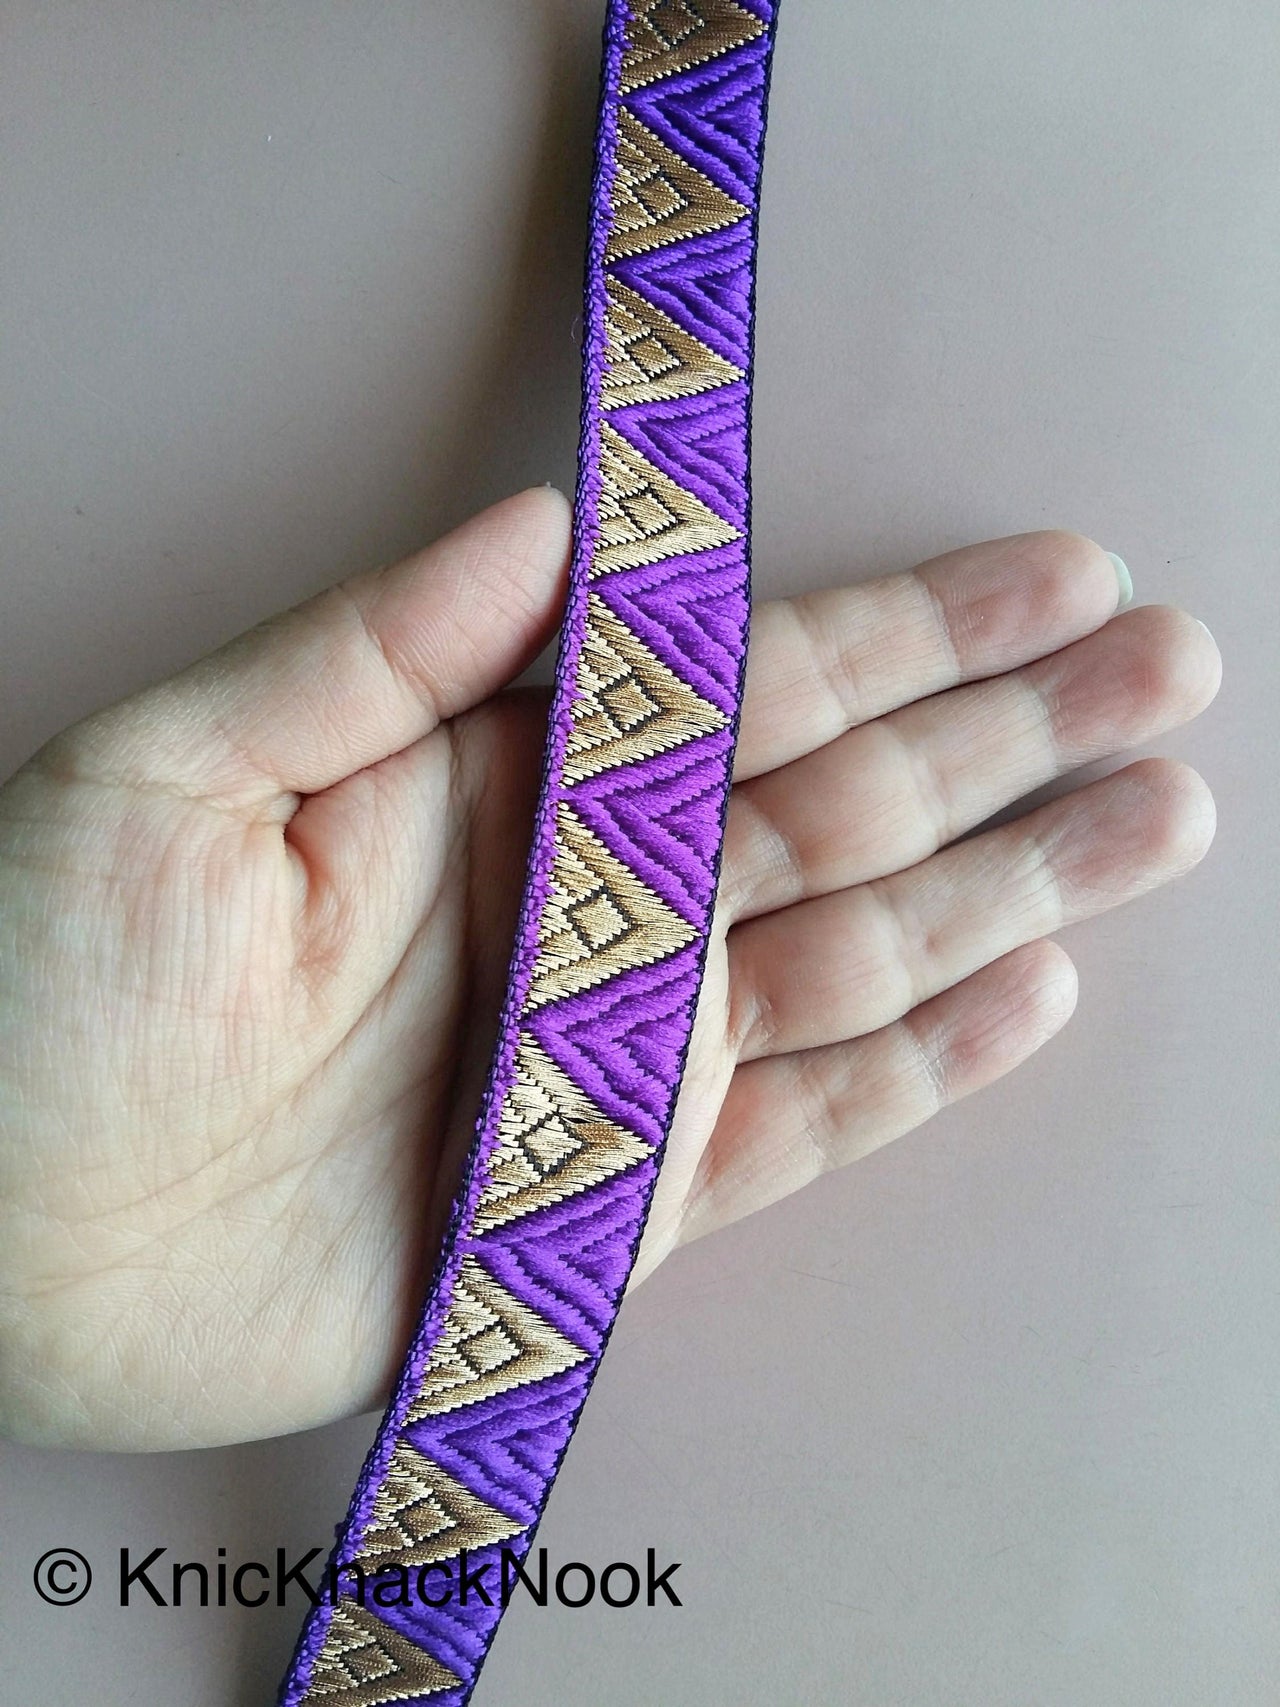 Jacquard Weave Trim, Copper Thread Triangle Embroidery Lace Trim, 20mm Wide